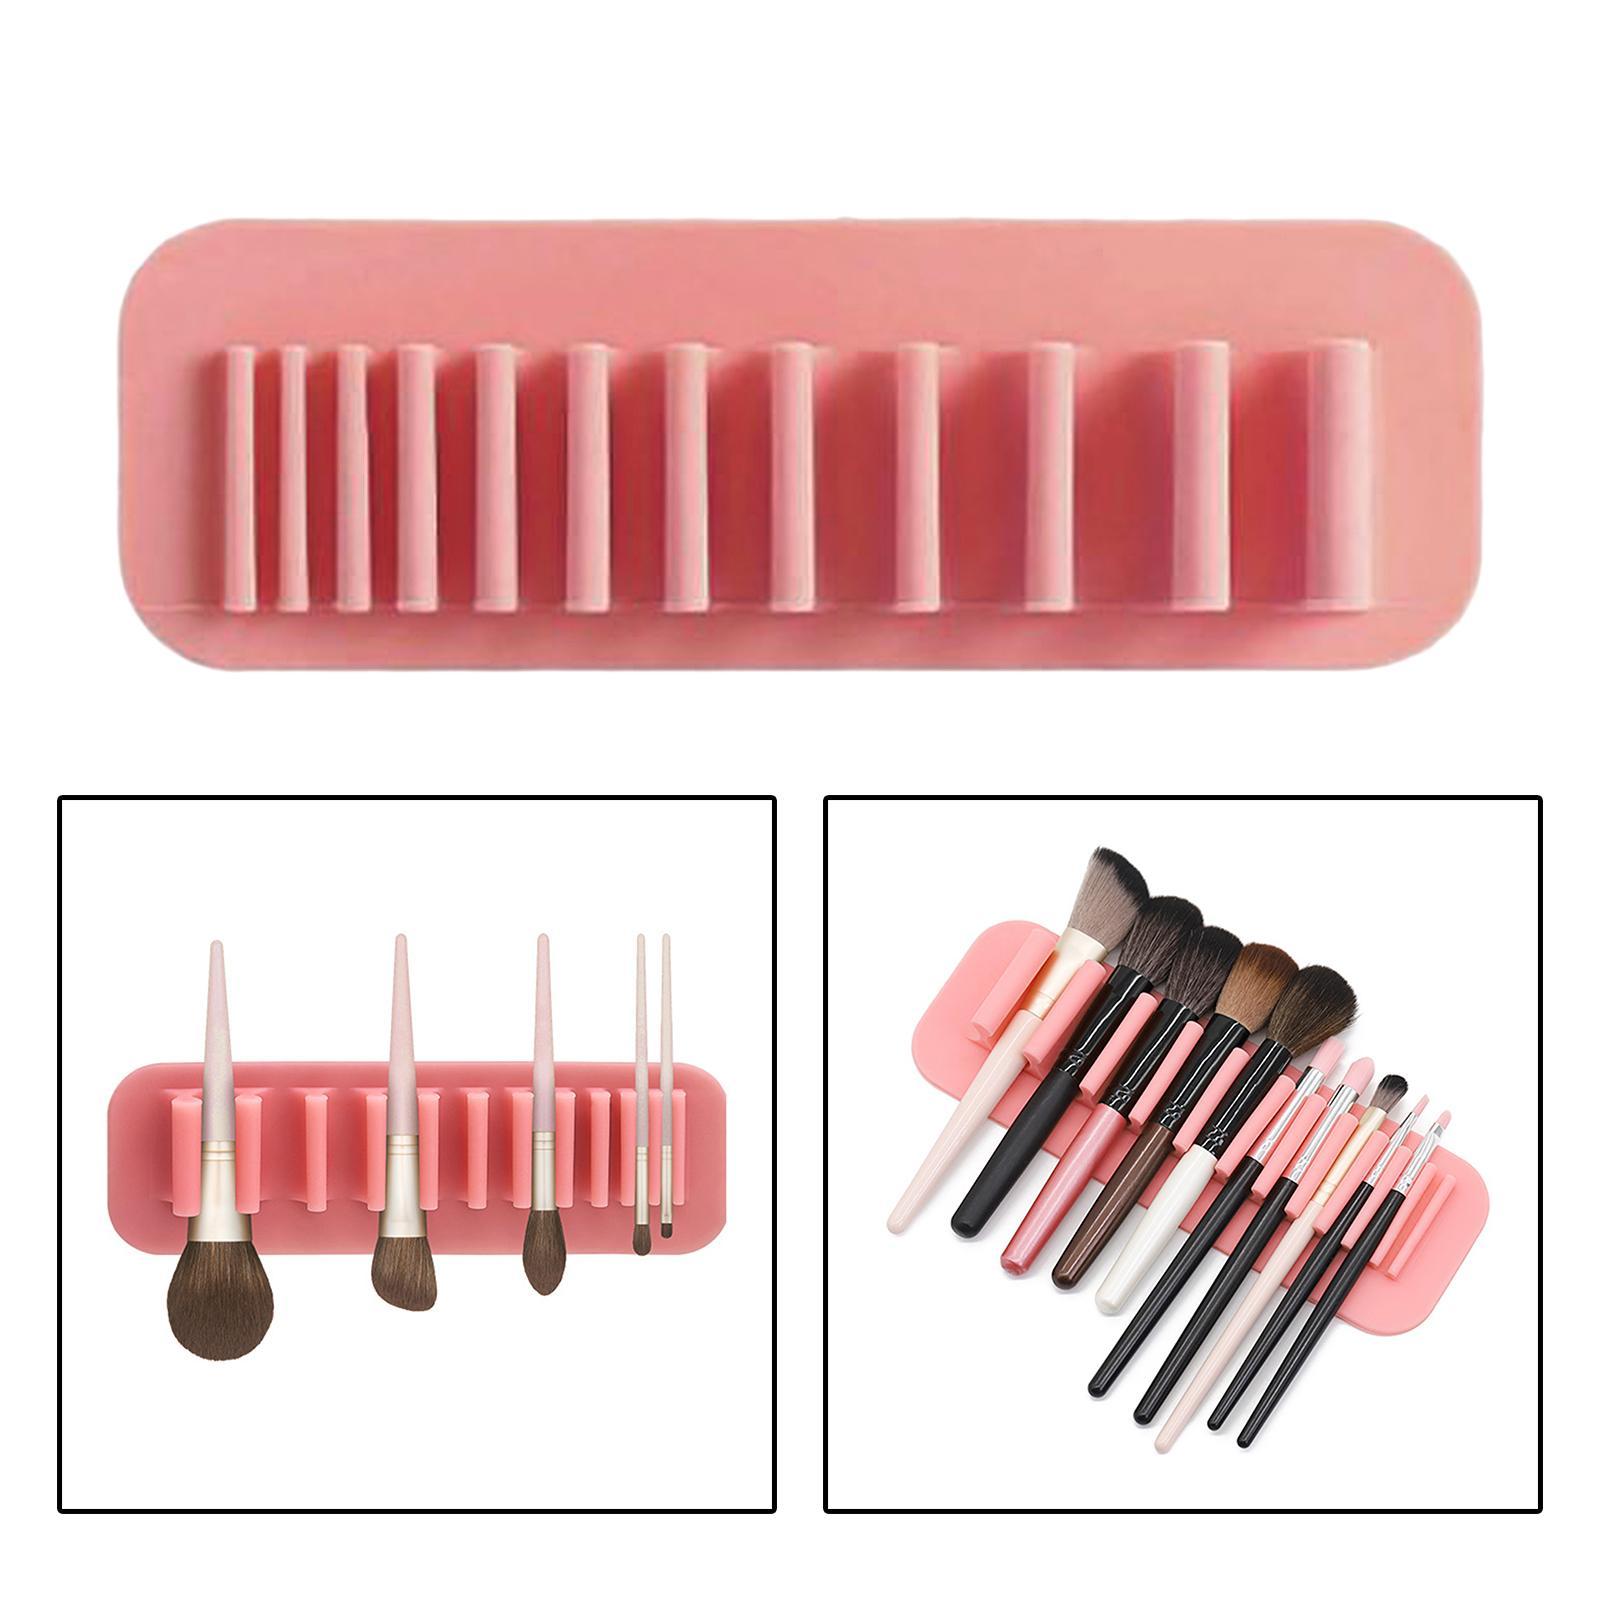 2X Silicone Wall Mount Makeup Brush Holder Display Rack Shelf Pink